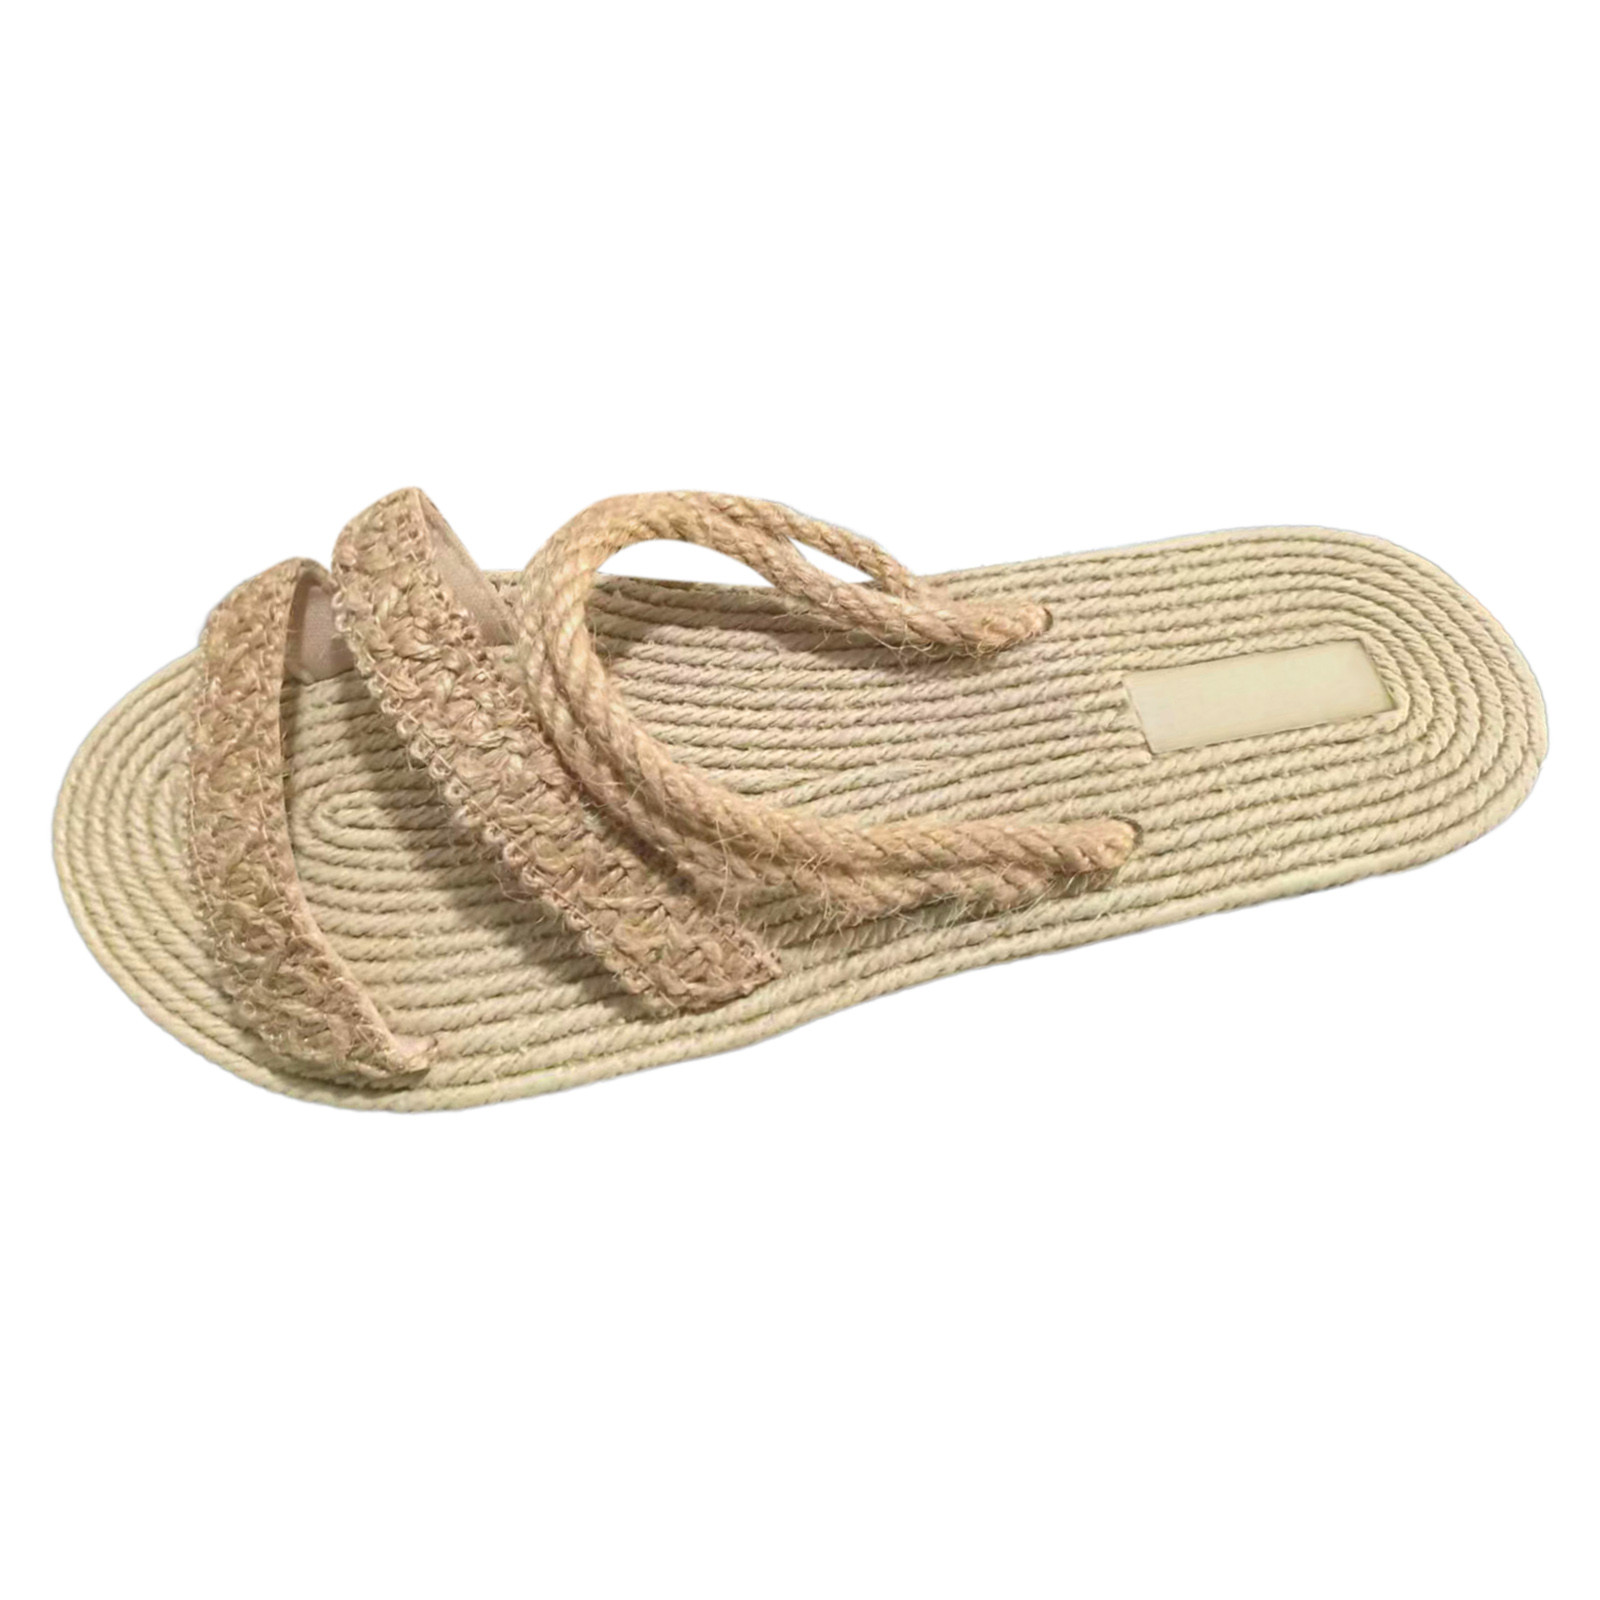 Sandals Women Comfortable Beach Summer Simple Casual Straw Wear Flat ...